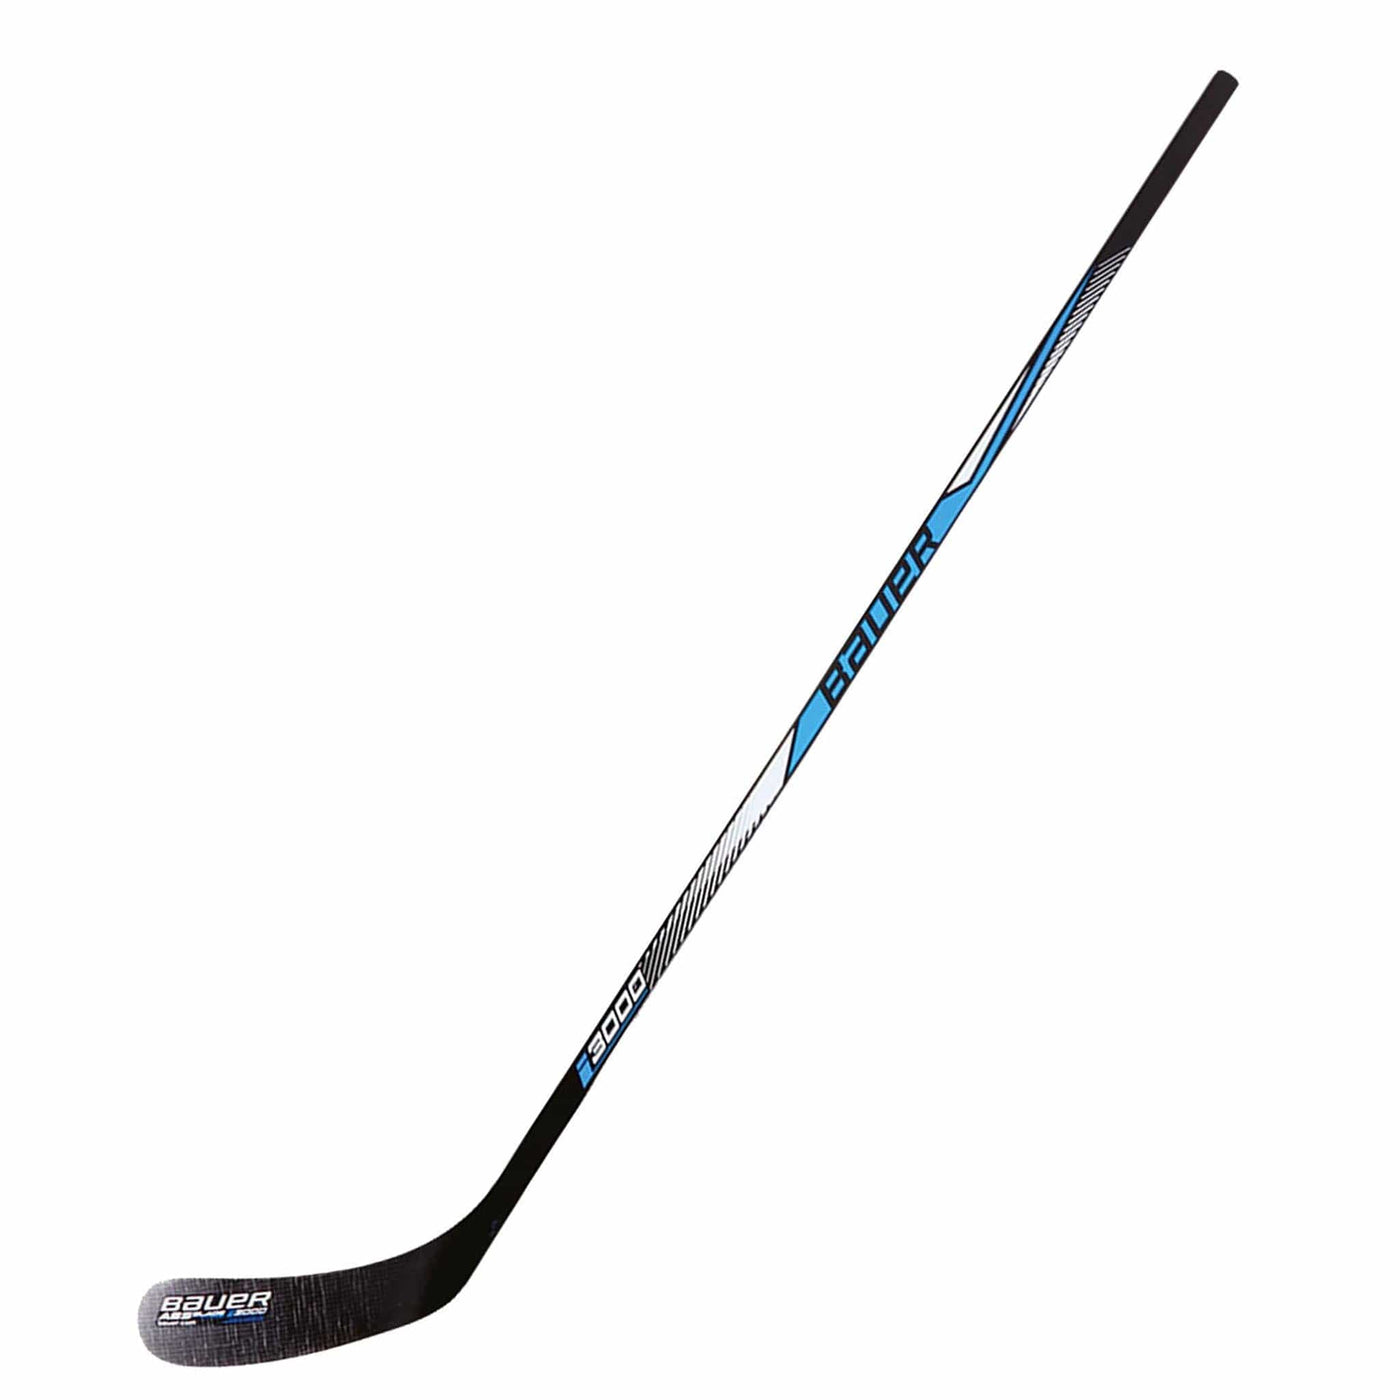 Bauer i3000 ABS Senior Wood Hockey Stick